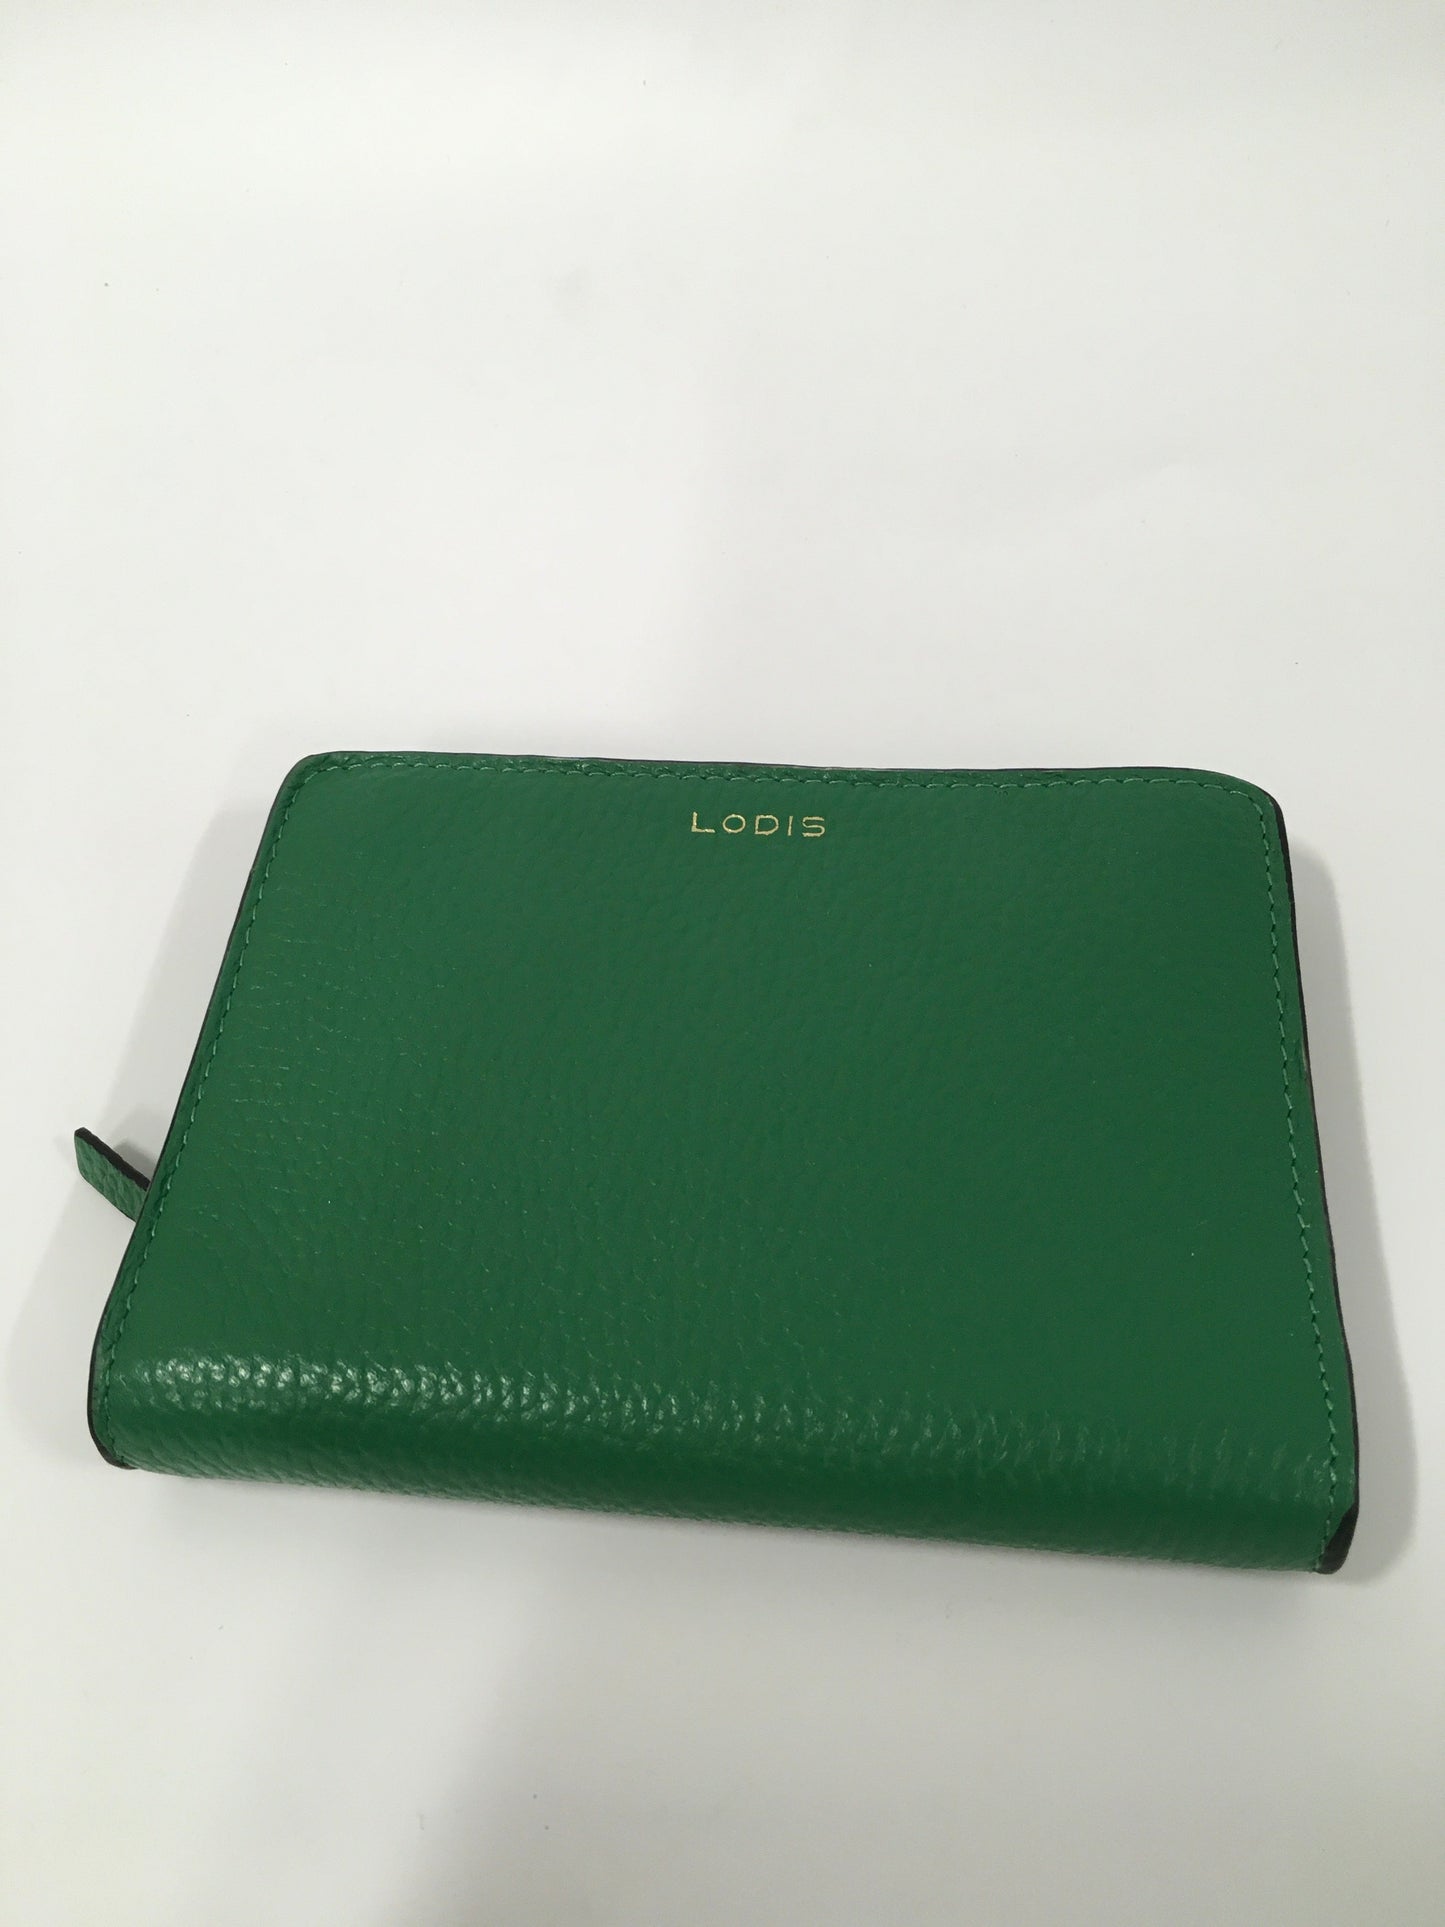 Wallet Leather Lodis, Size Medium